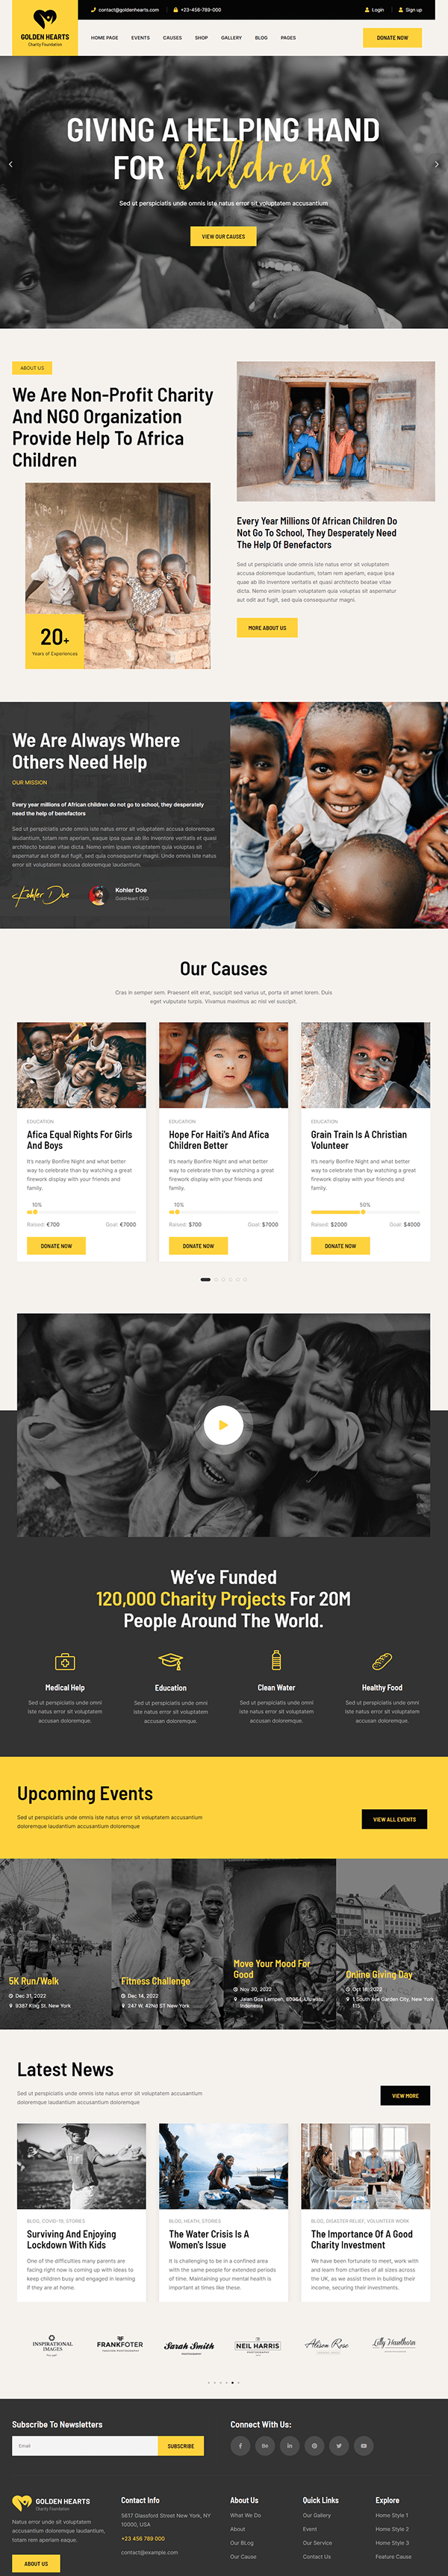 Charity / Non Profit Website Design